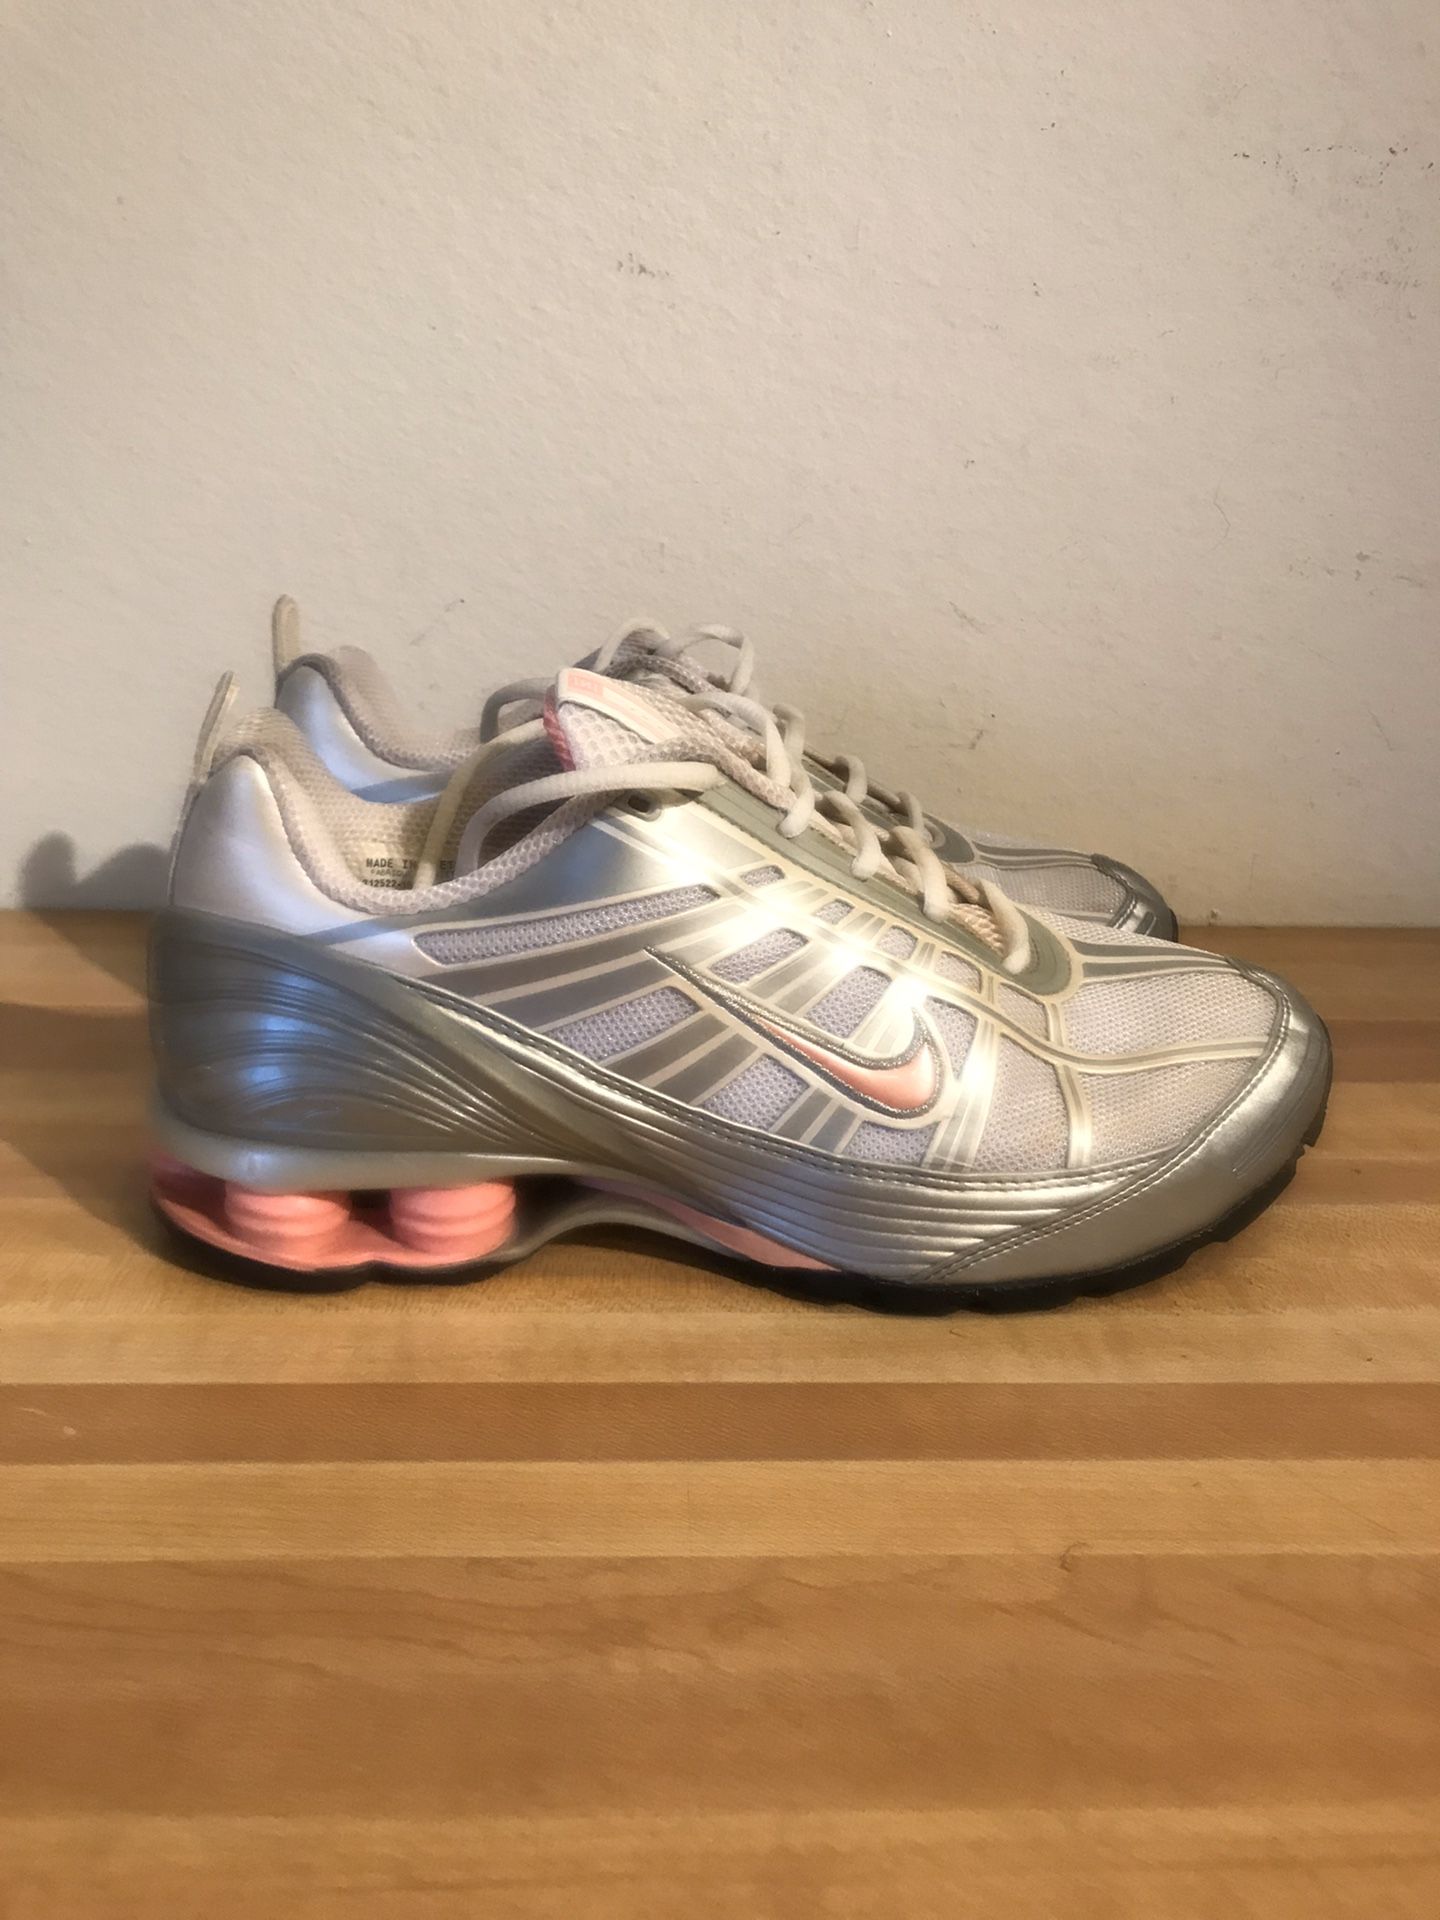 Nike Shox 312522-161 silver pink women’s running sneakers shoes size 9